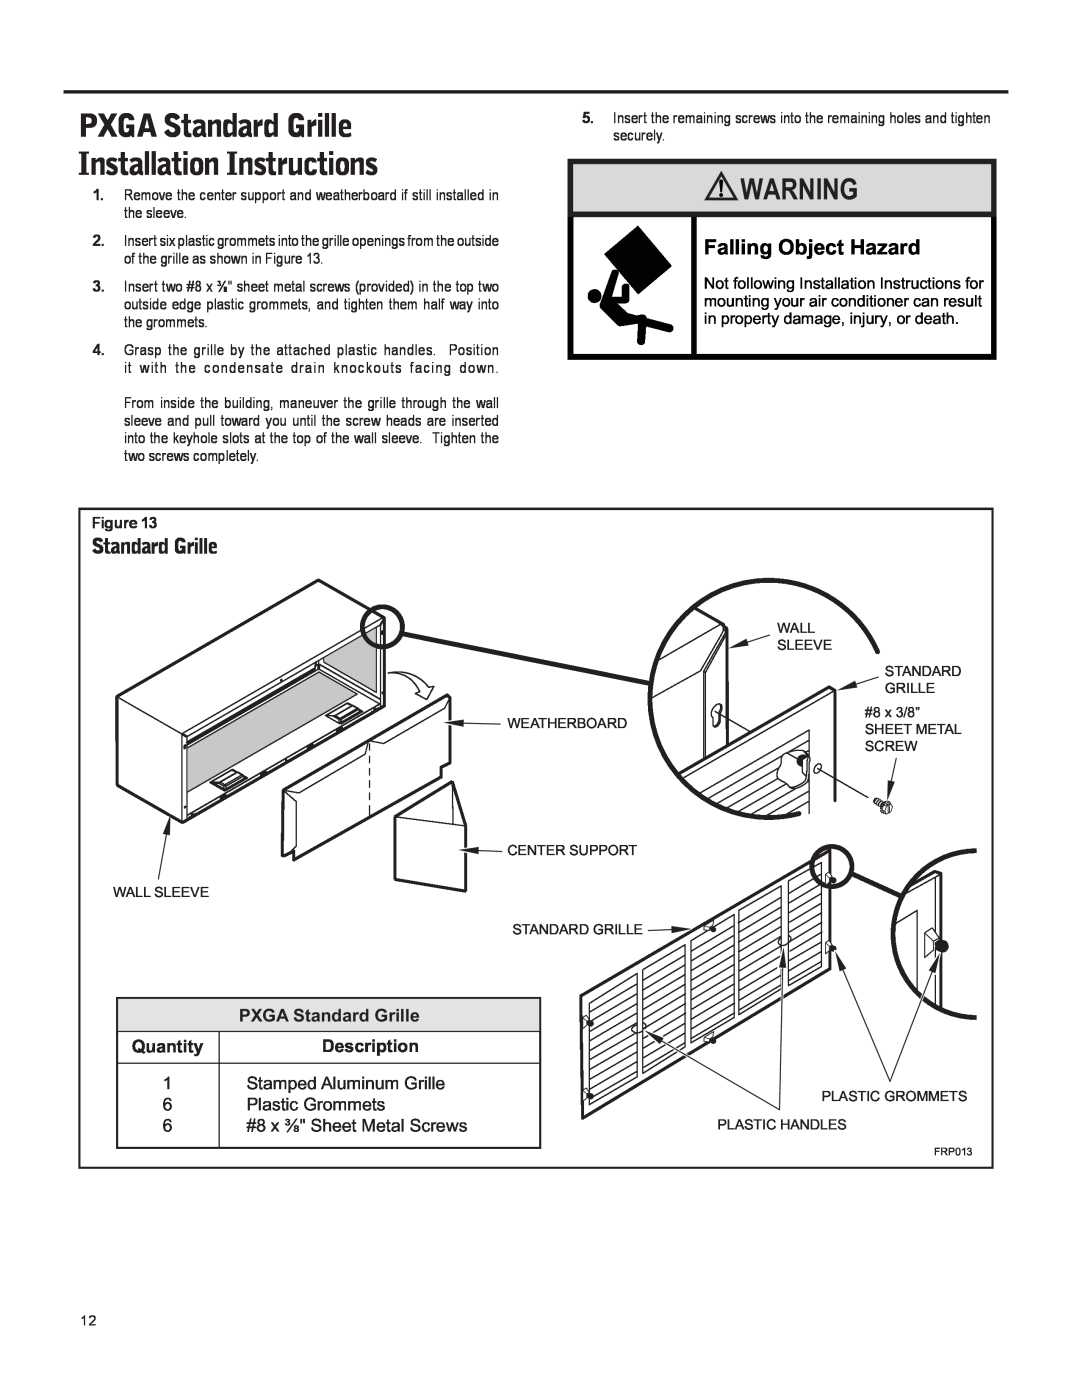 Friedrich 920-087-09 (12/10) PXGA Standard Grille Installation Instructions, Falling Object Hazard, Quantity, Description 